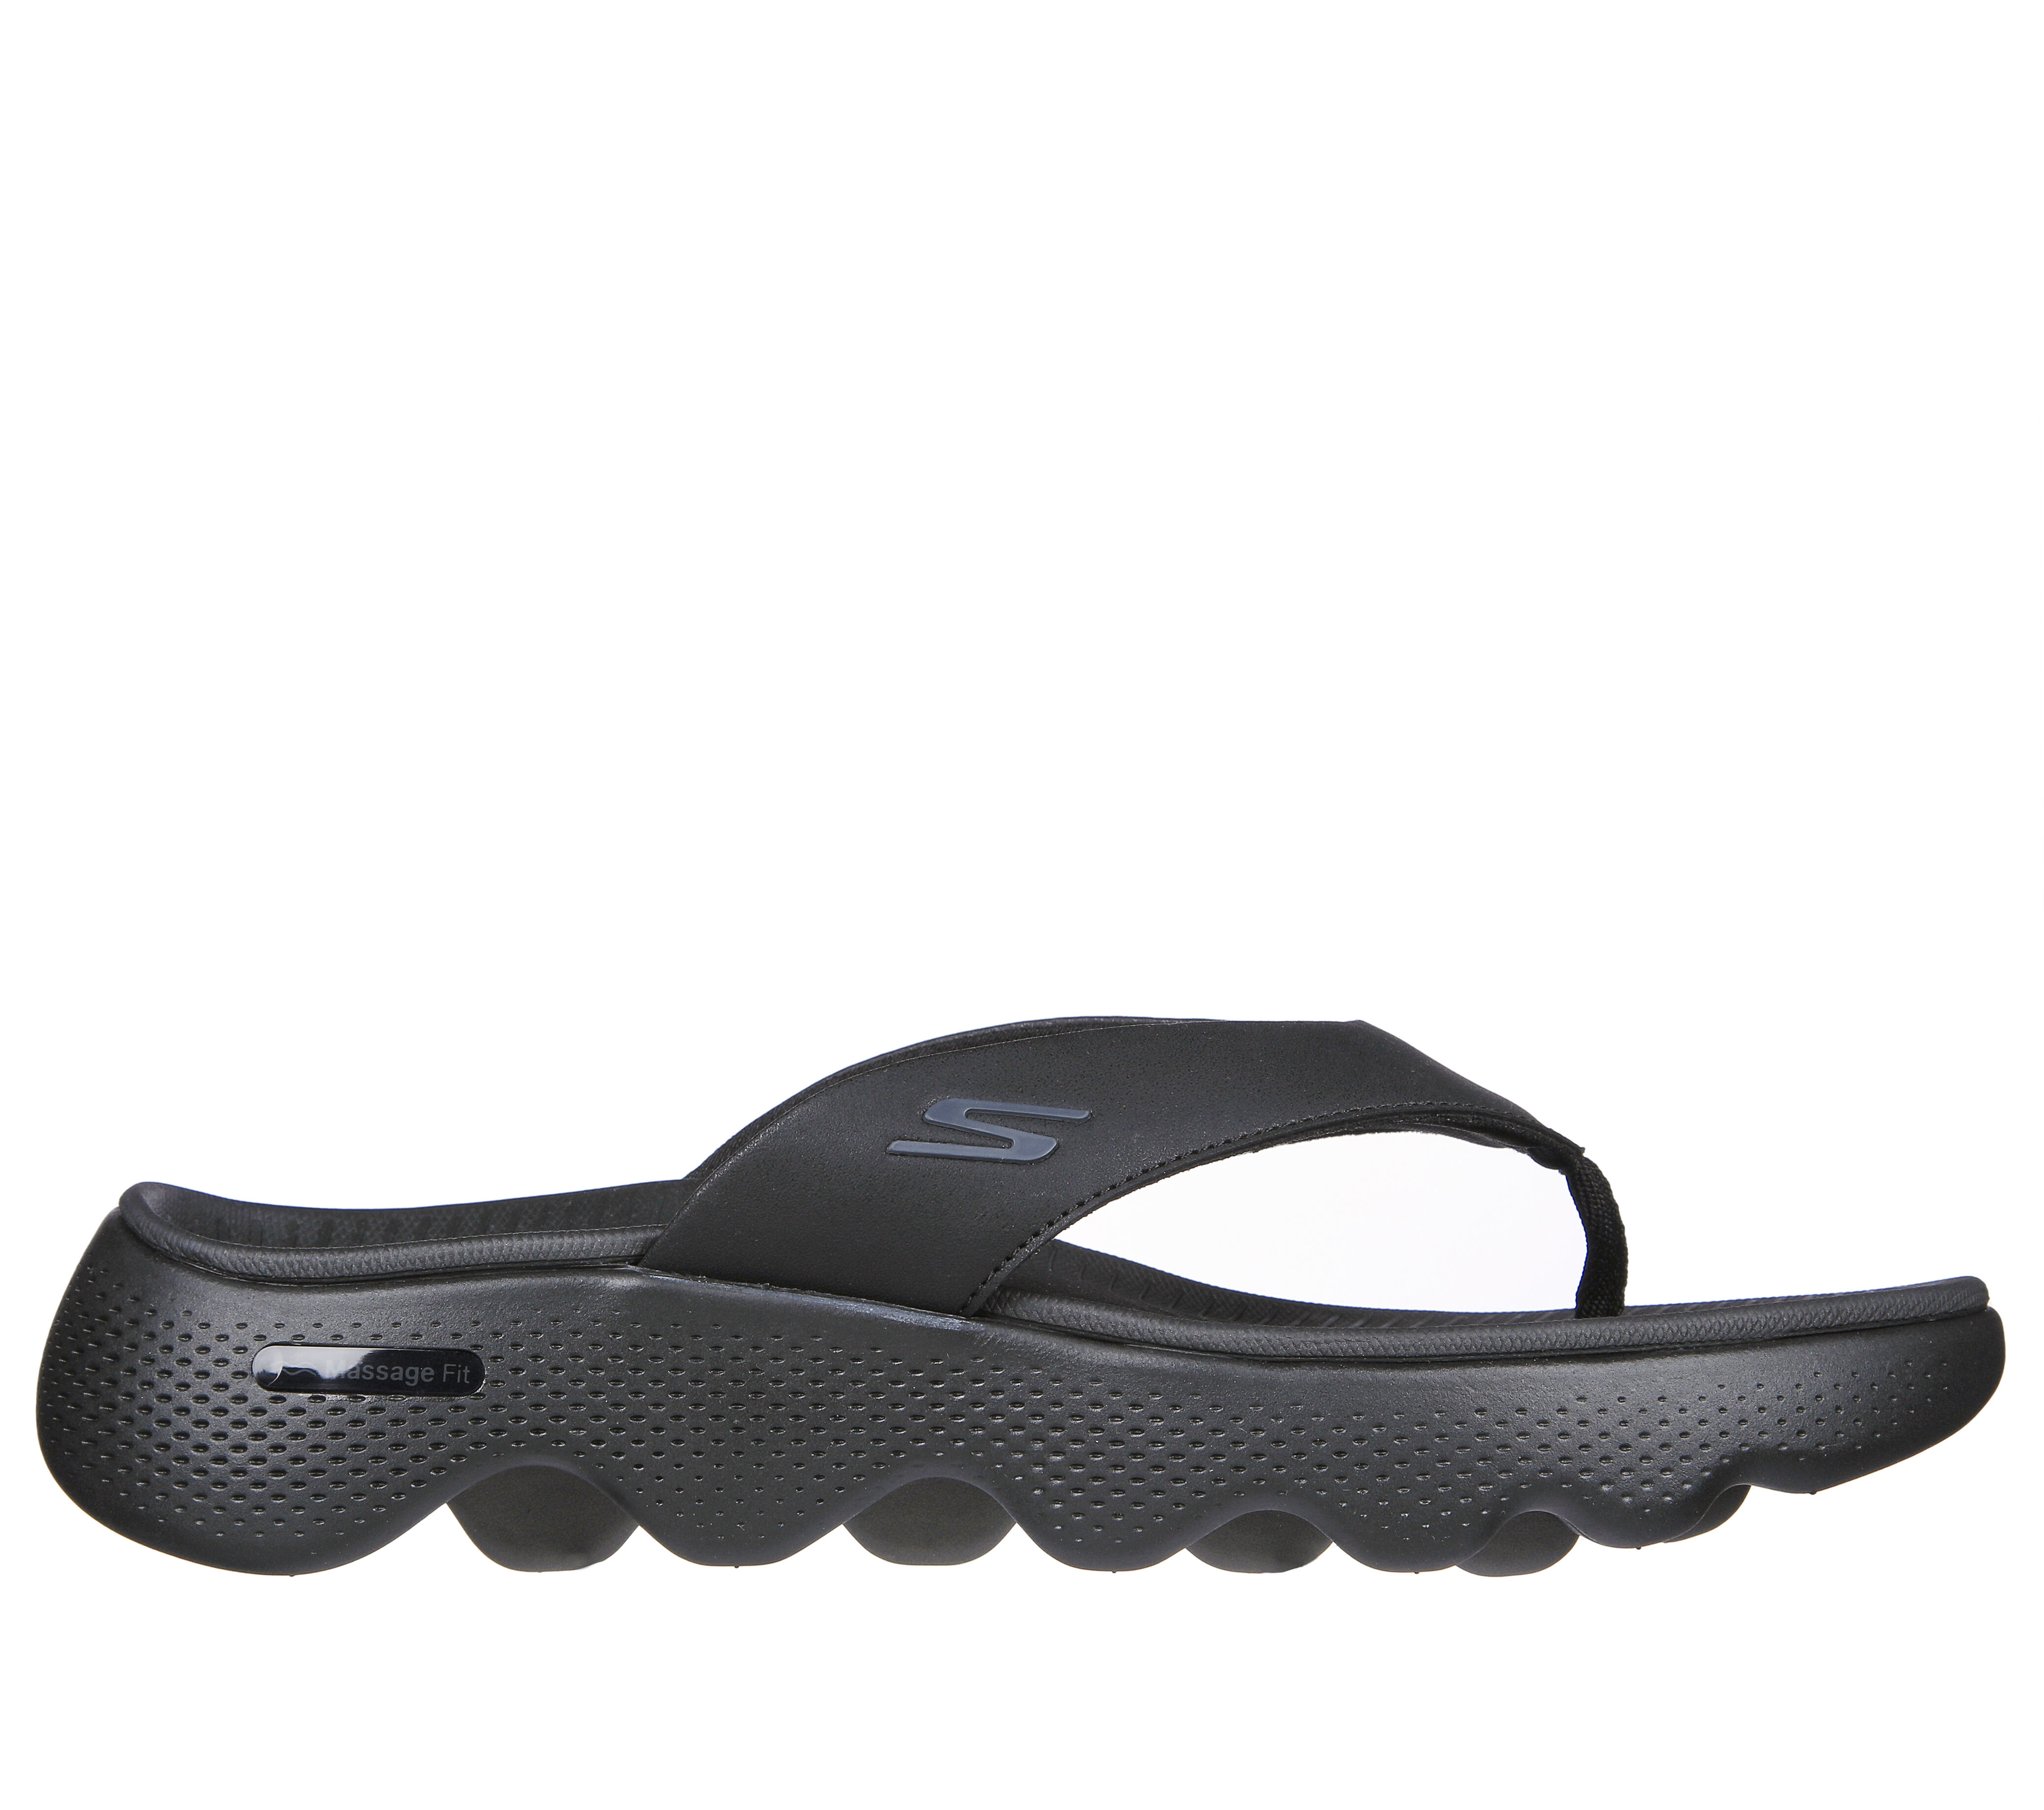 Skechers GO WALK Massage Fit Sandal